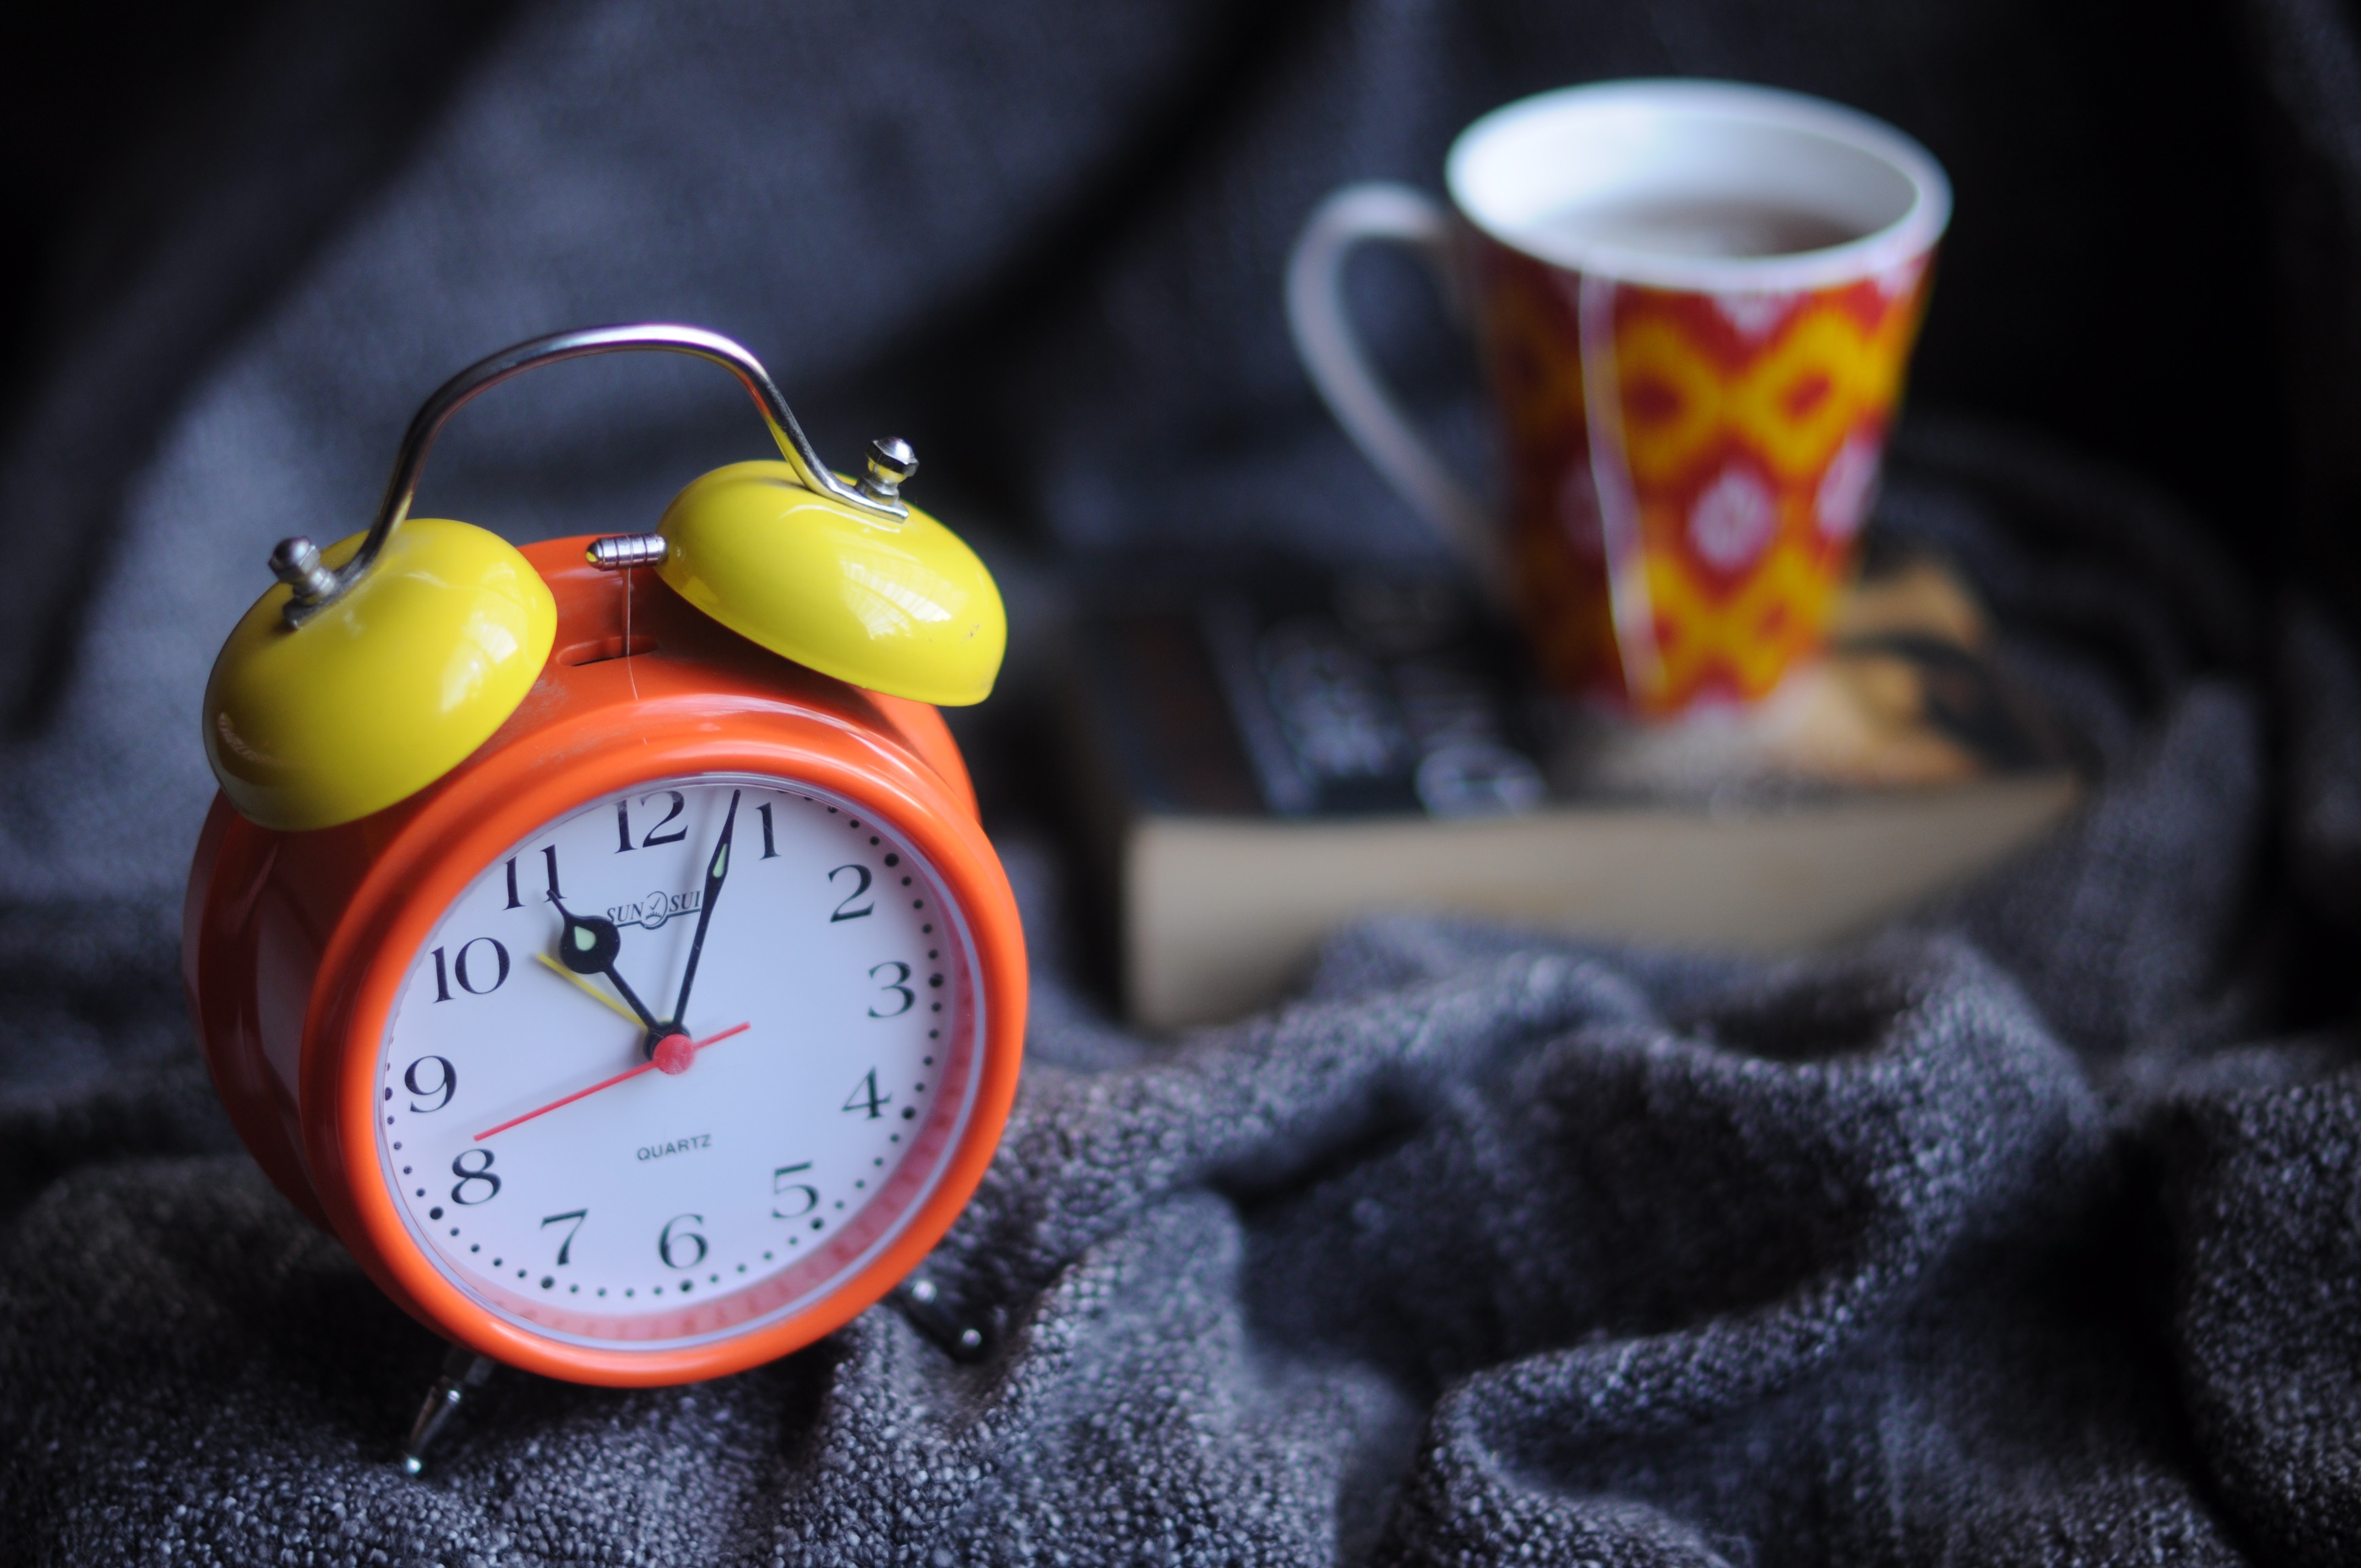 Clock and coffee mug on a bed